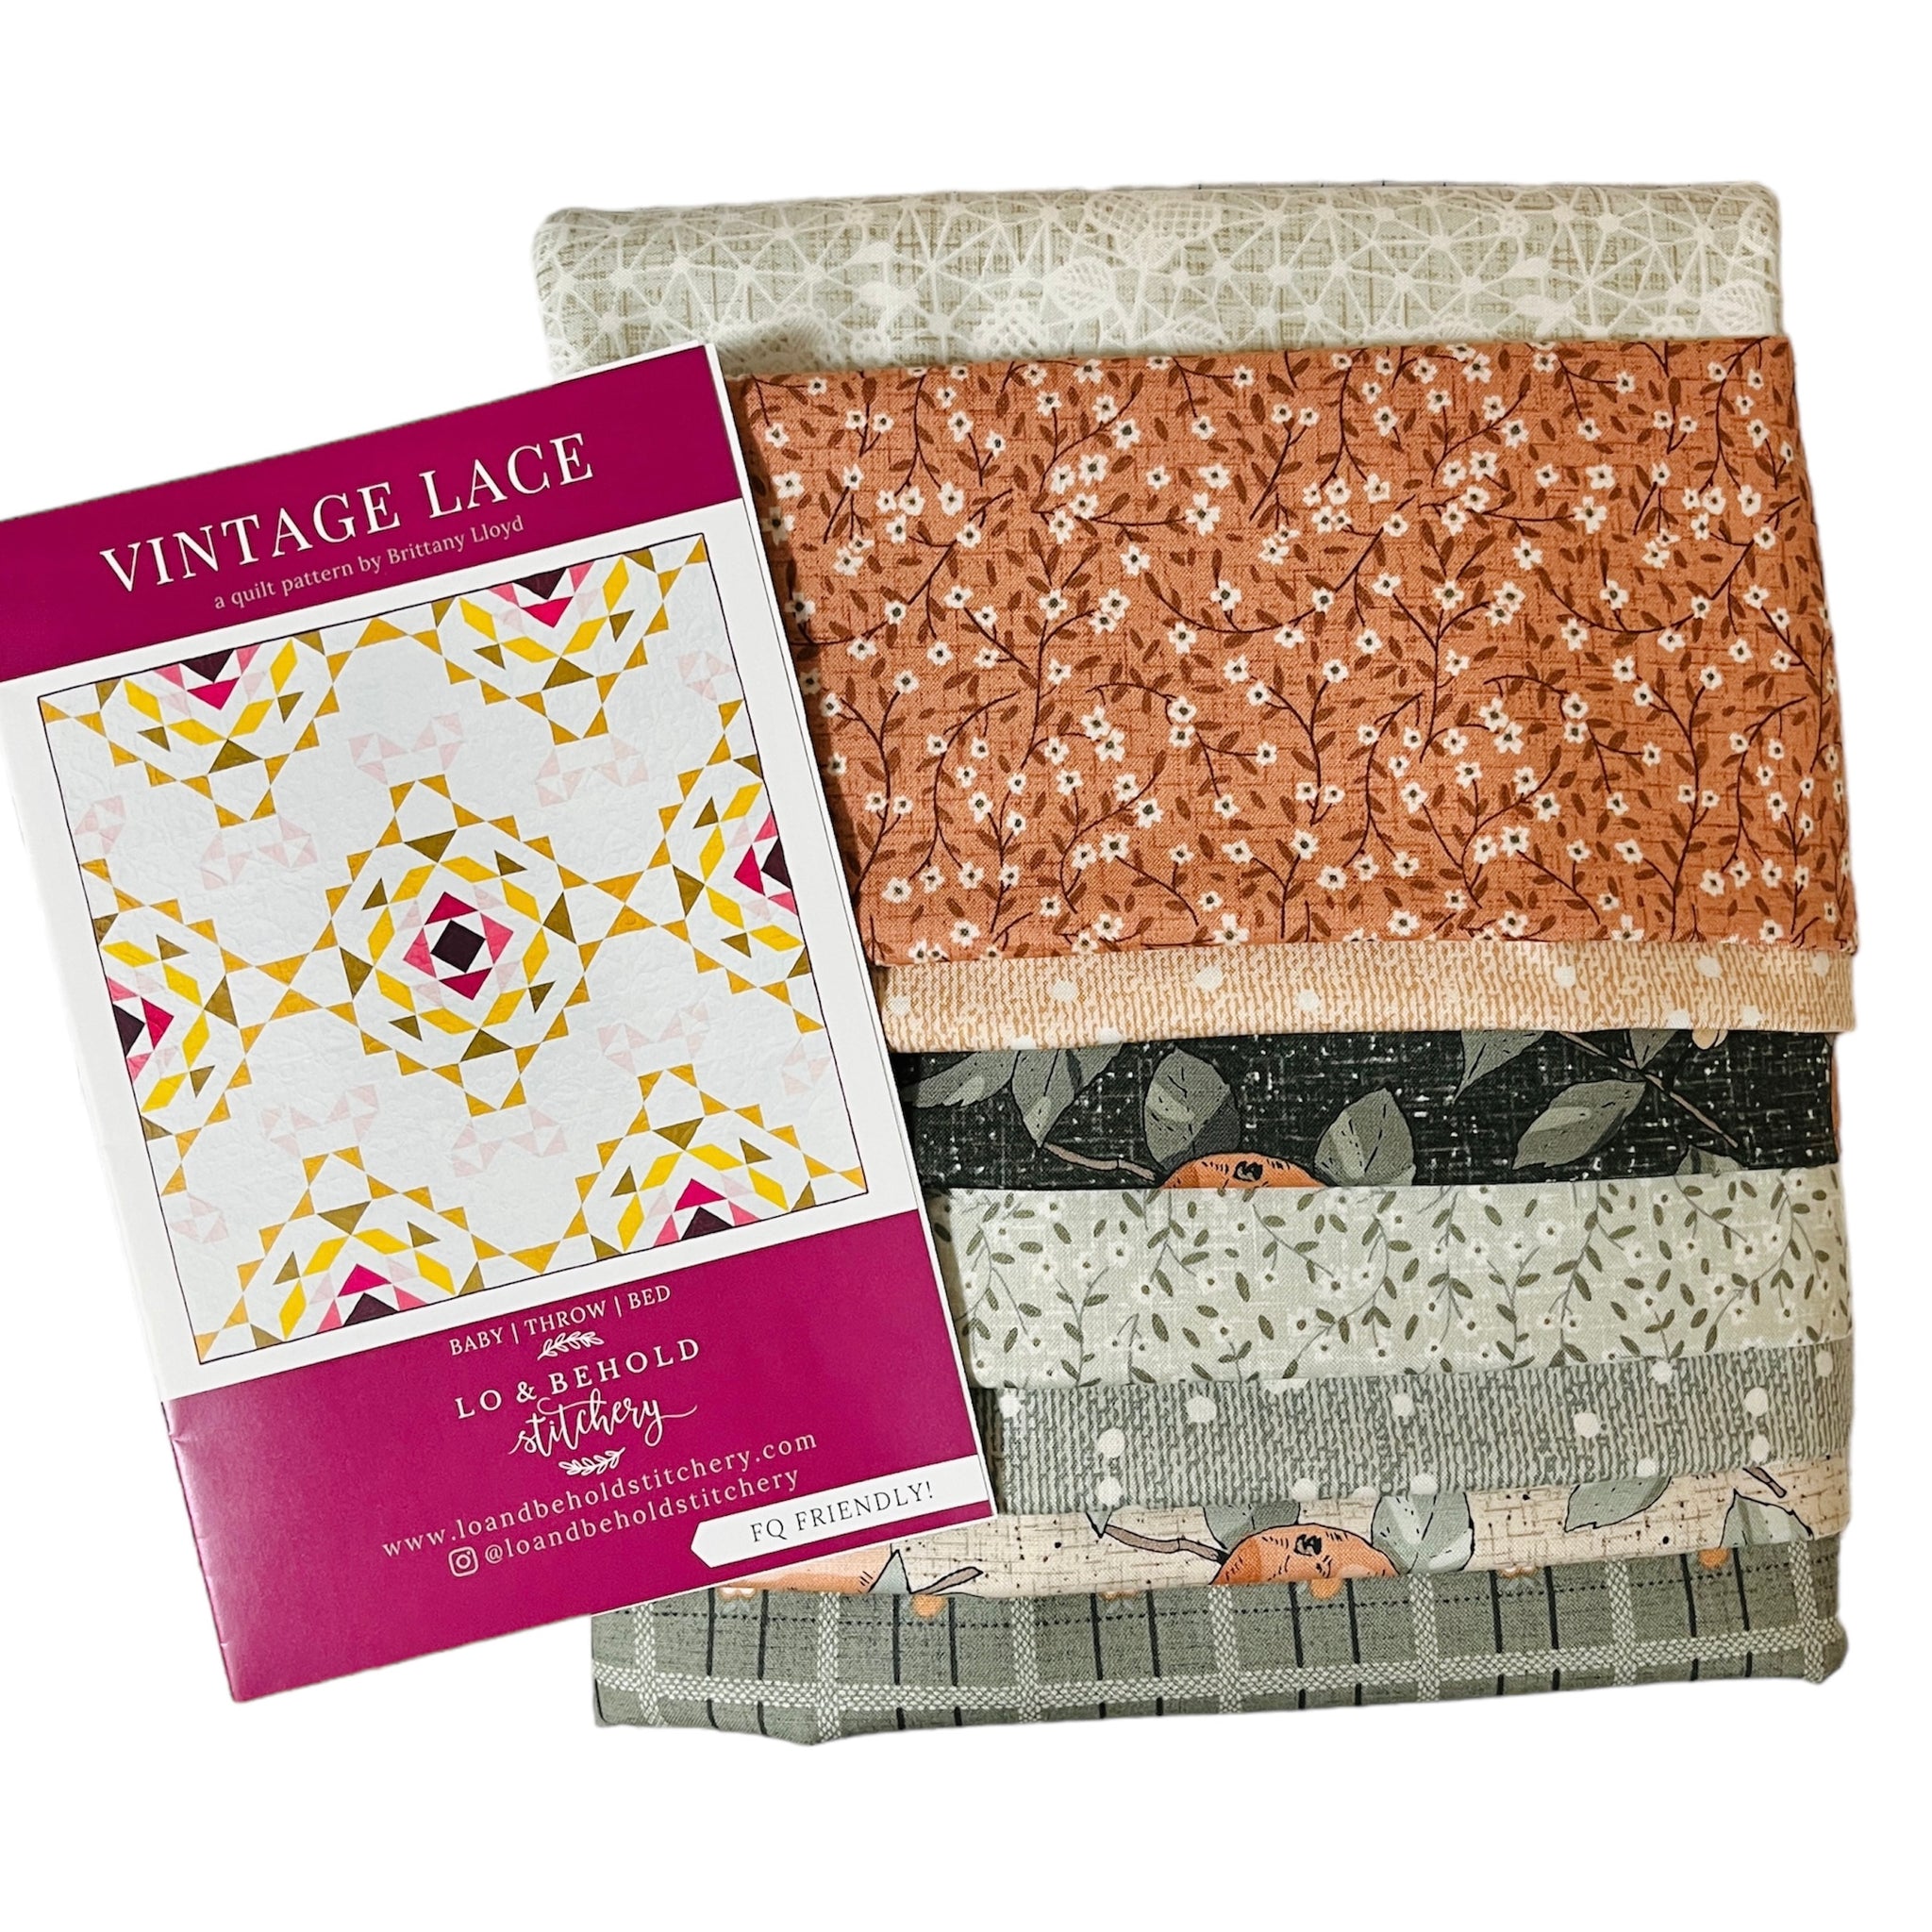 Vintage Lace quilt kit - Klara